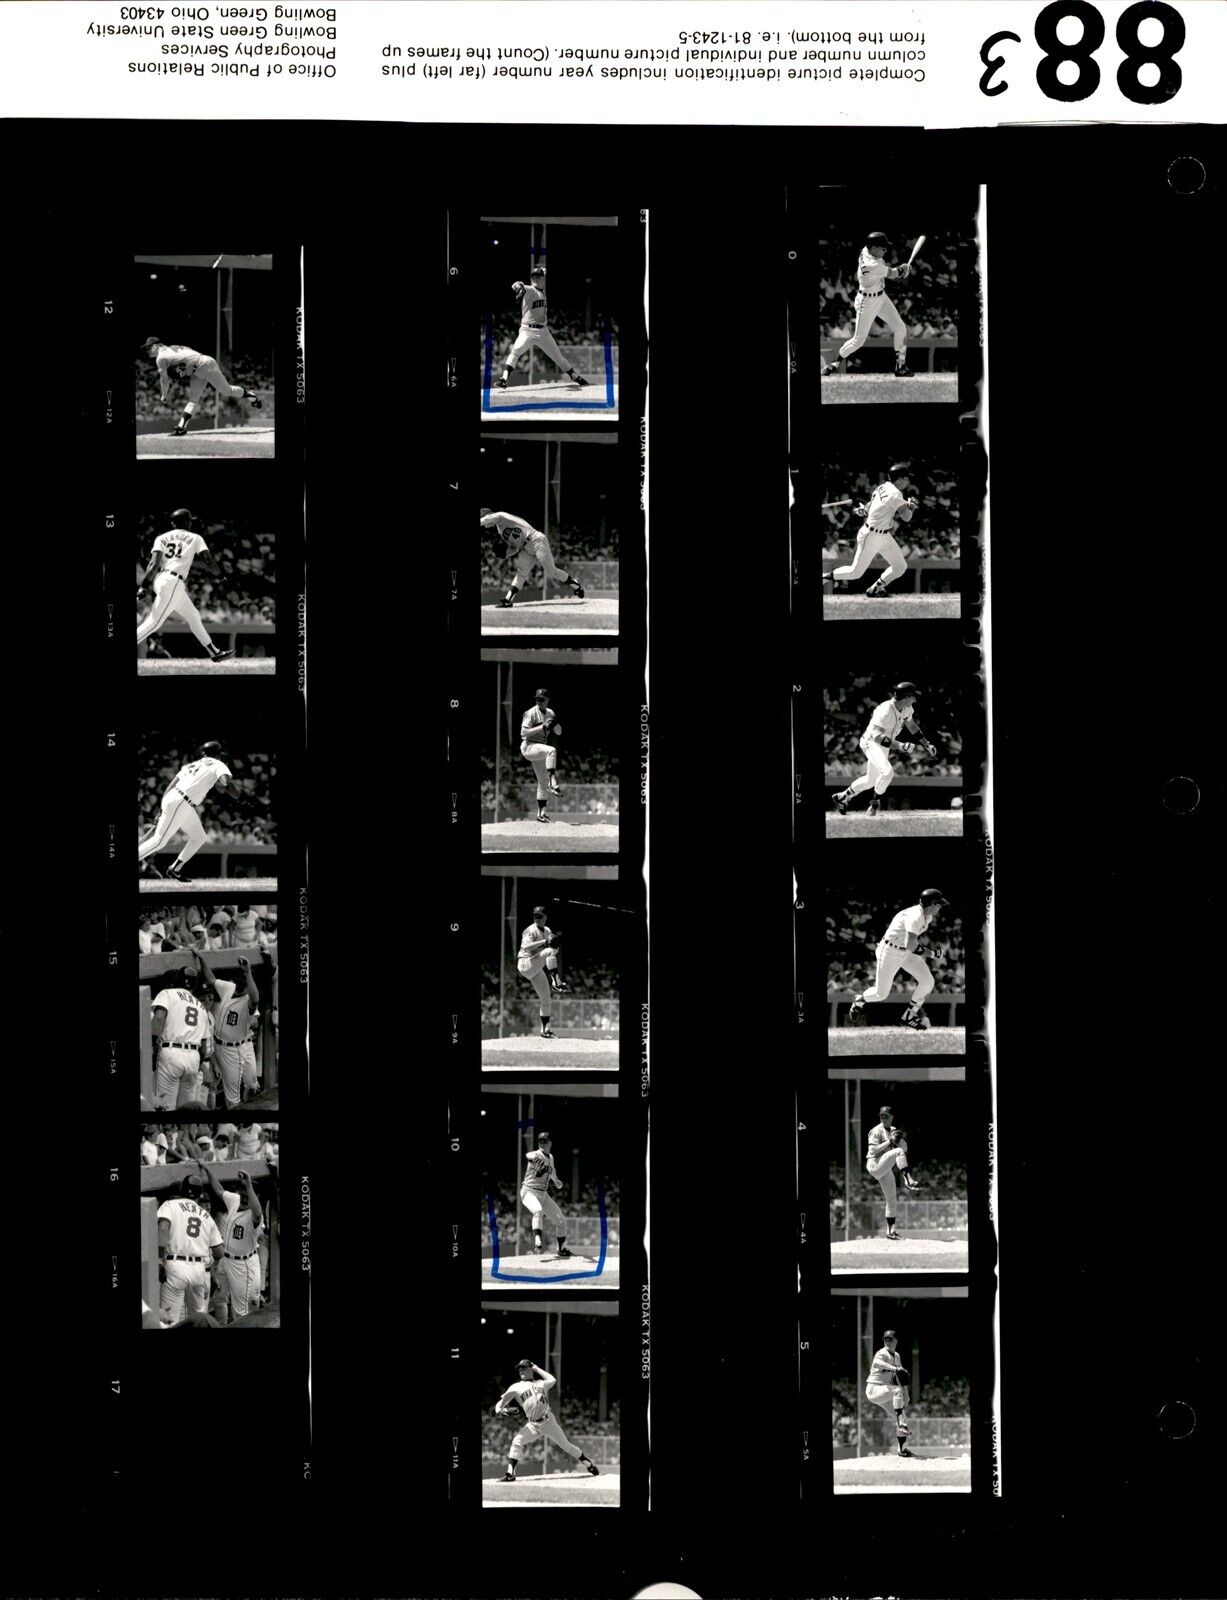 LD363 1988 Original Contact Sheet Photo MIKE HEATH LARRY HERNDON TIGERS - TWINS